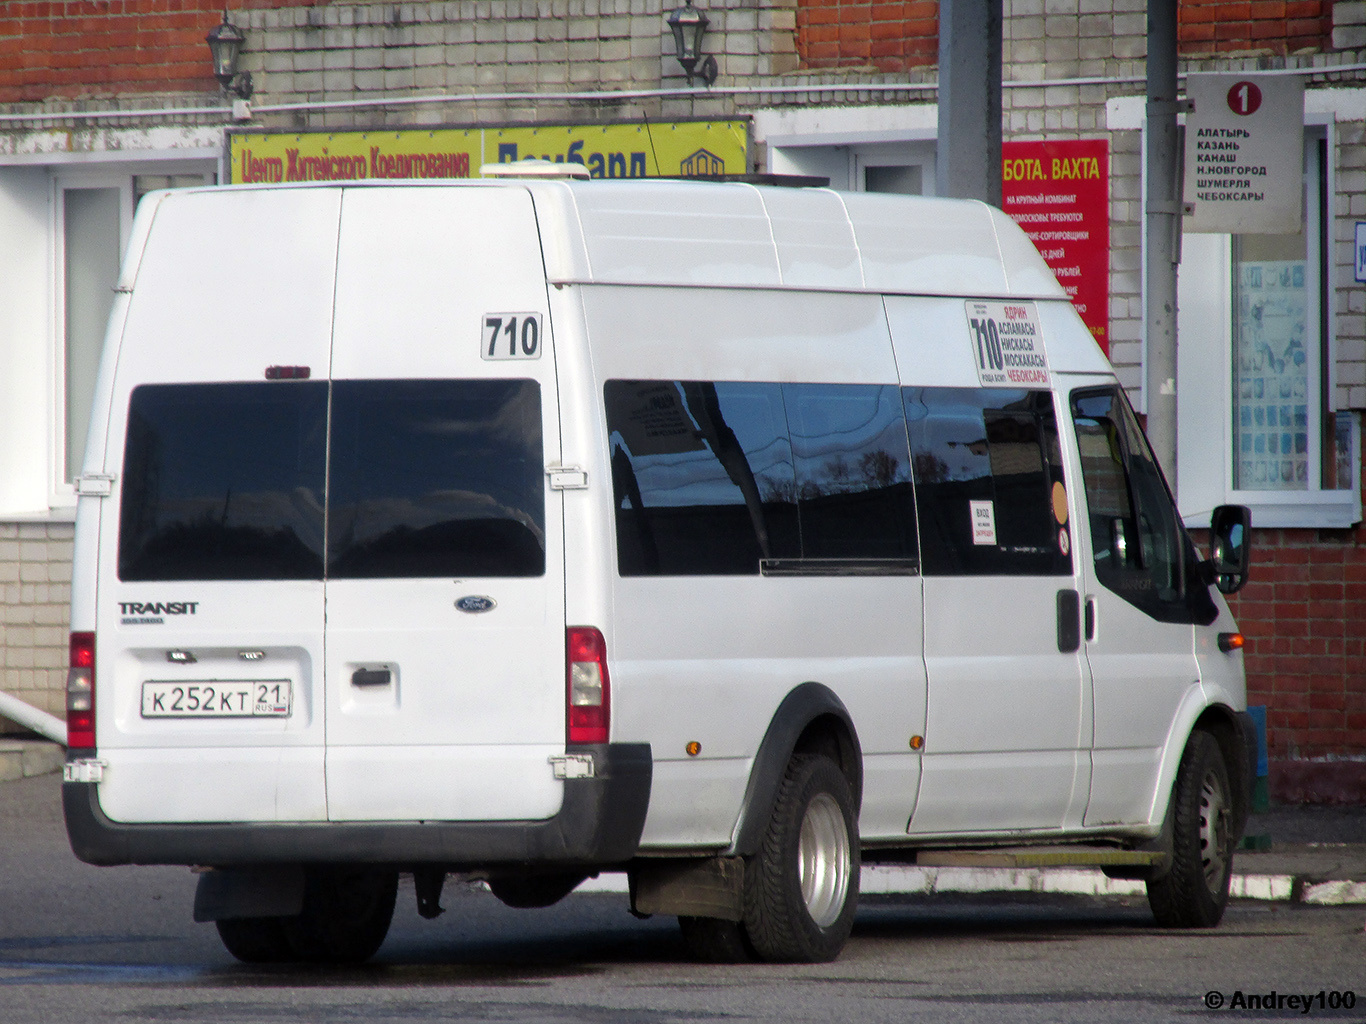 Csuvasföld, Imya-M-3006 (Z9S) (Ford Transit) sz.: К 252 КТ 21